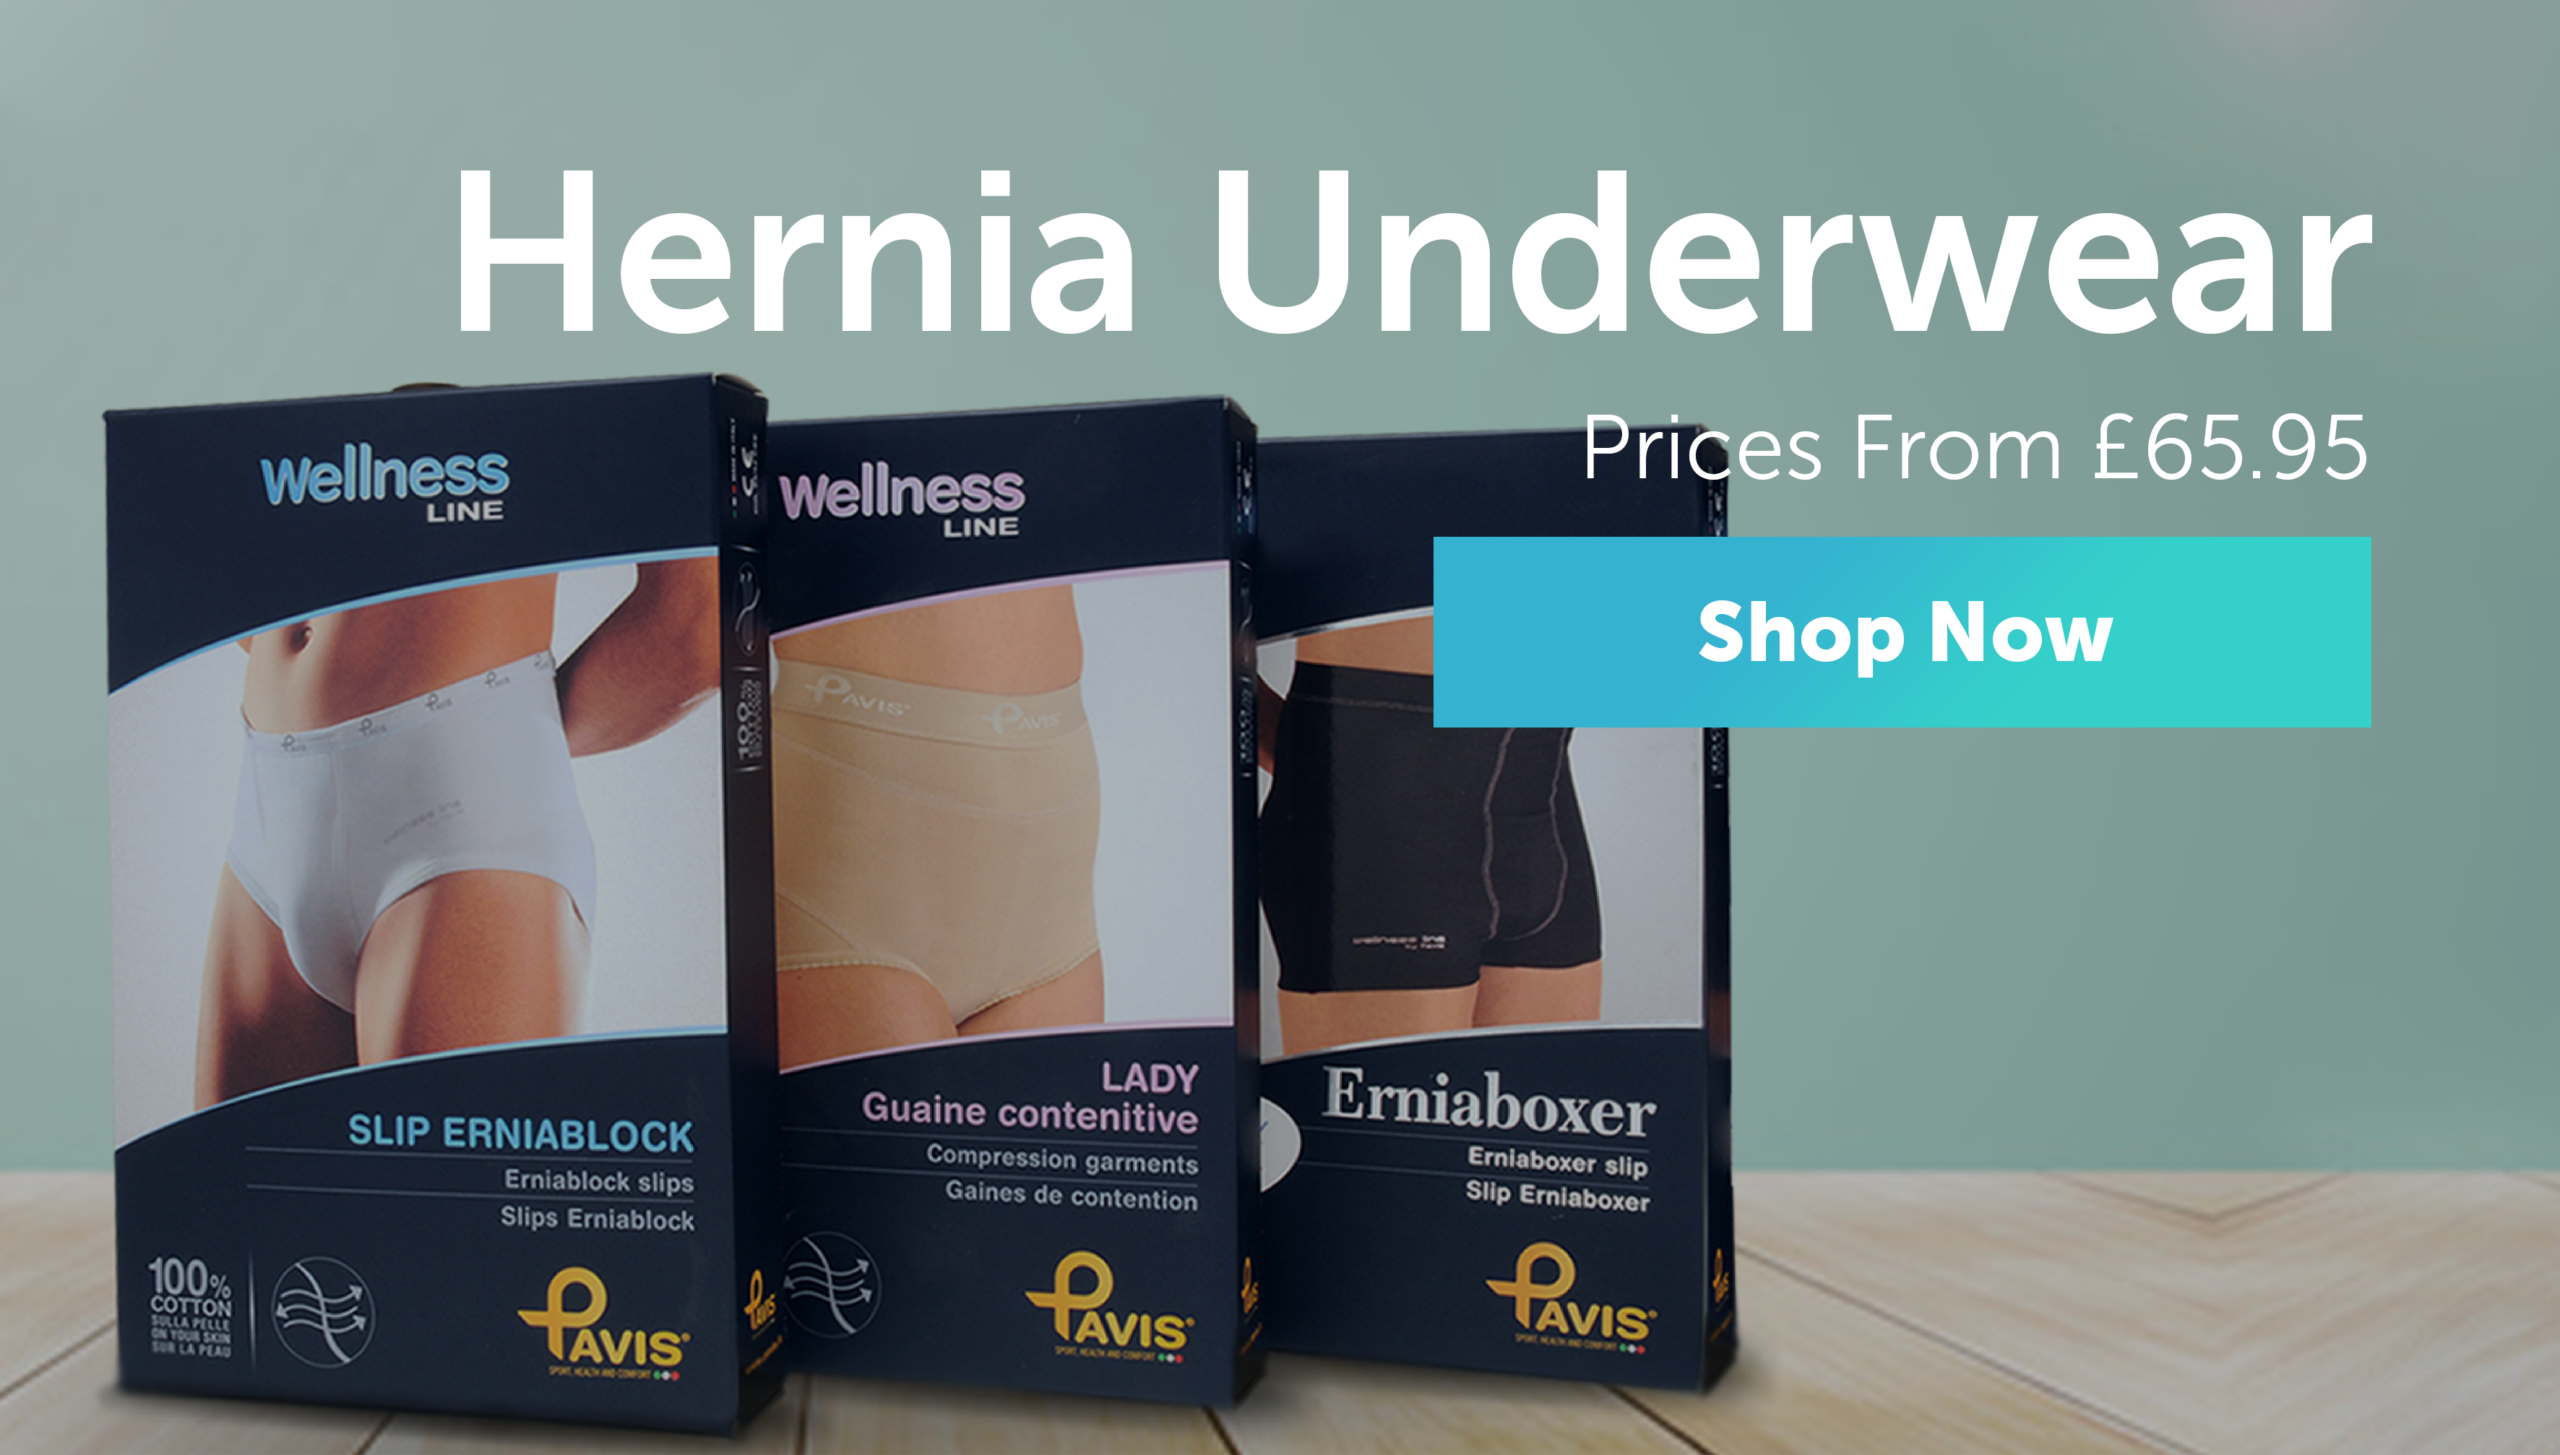 Hernia Underwear From £65.95